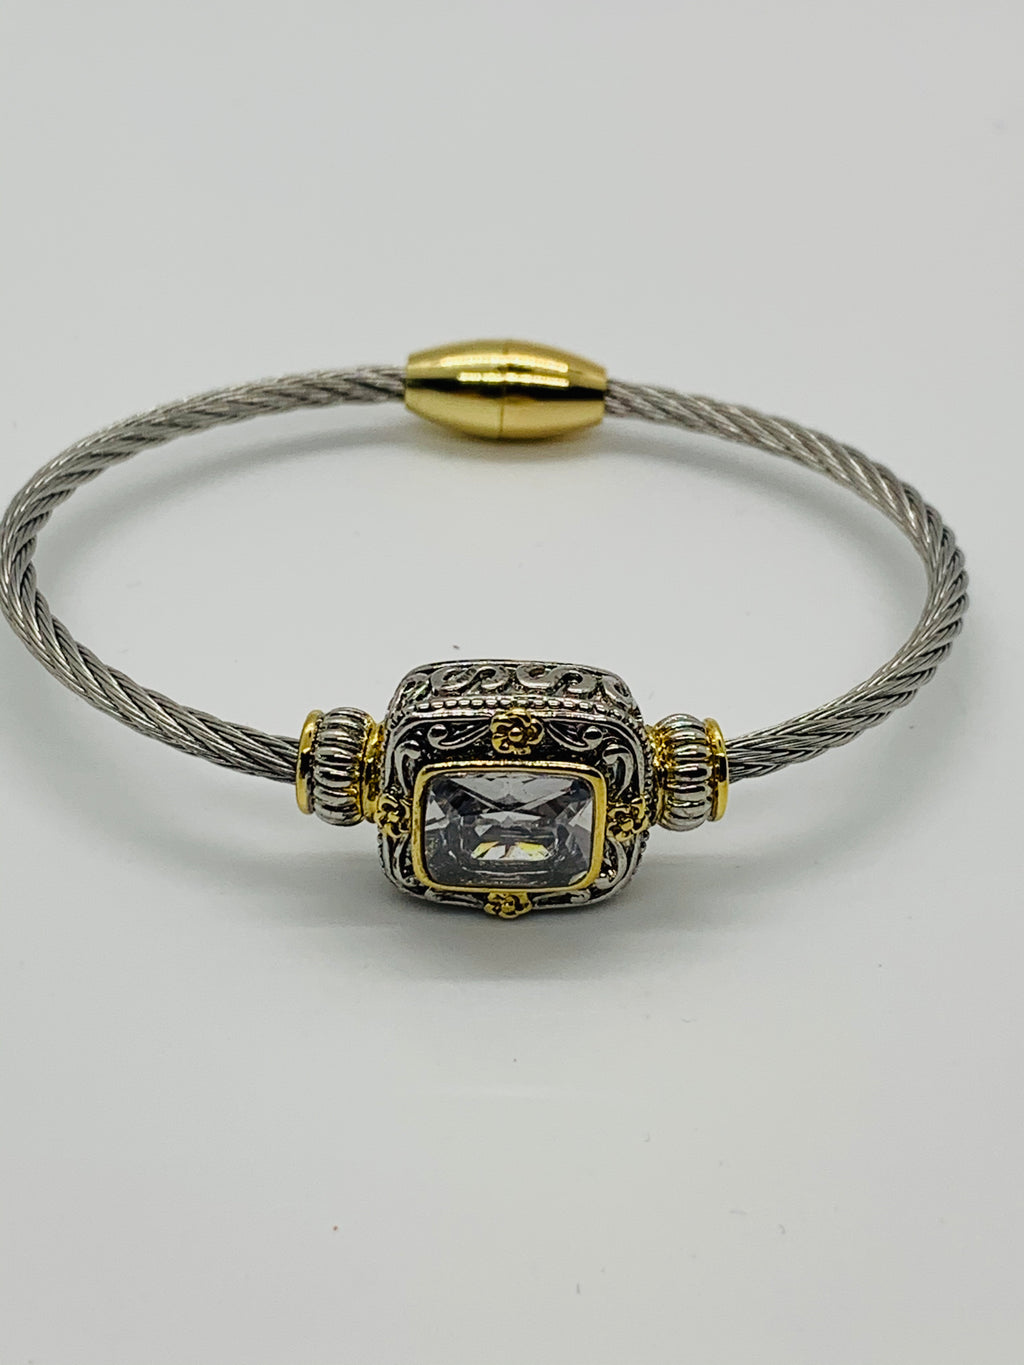 Designer style bracelets